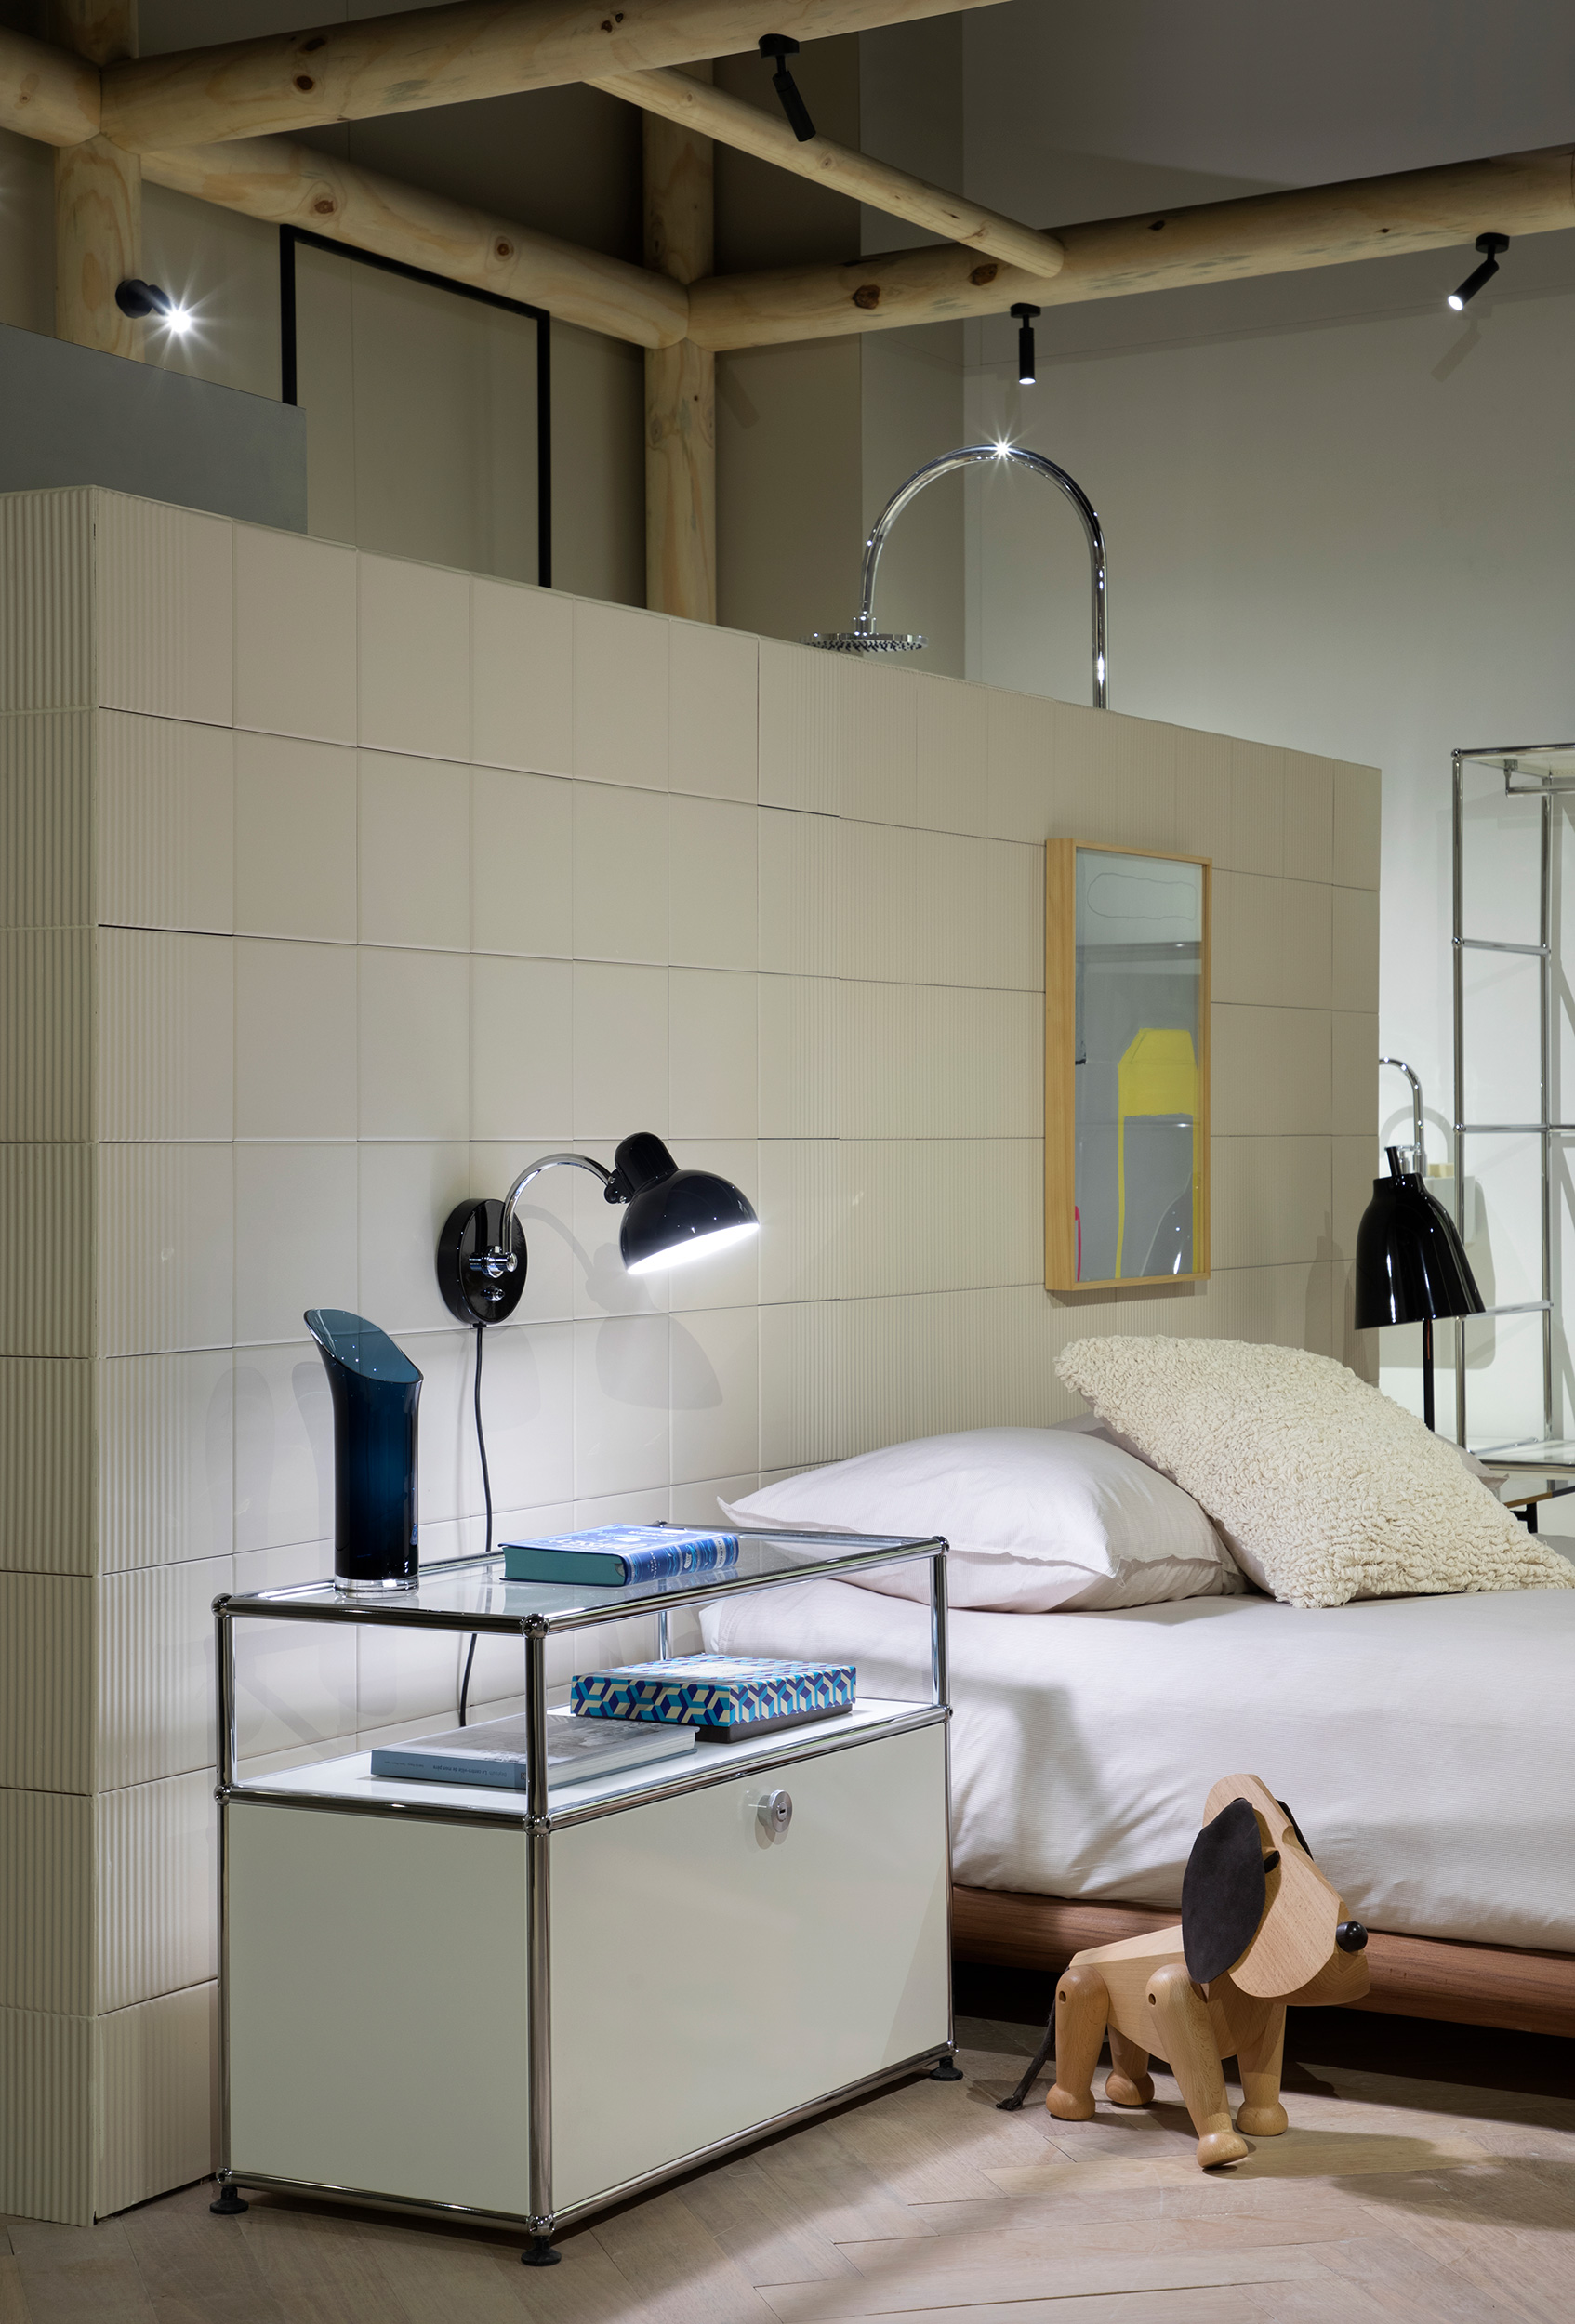 tufi mousse arquitetura studio alfi casacor sao paulo 2022 decor mostra decoracao quarto escultura cama luminaria